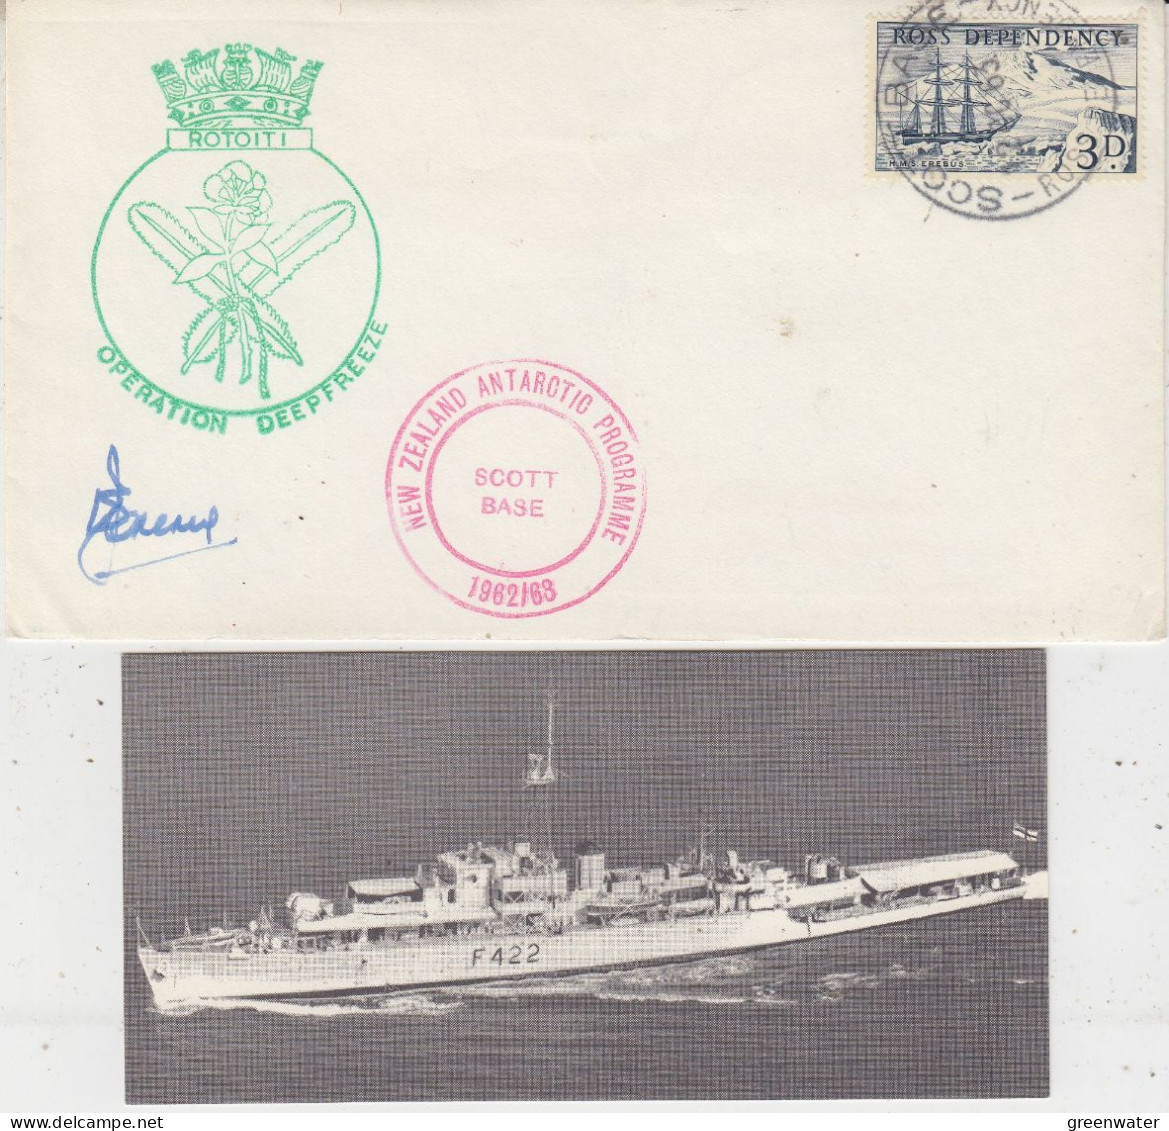 Ross Dependency HMNZS Rotoiti "Operation Deep Freeze" Signature + Card Ca Scott Base 12 OCT 1963 (SR199) - Spedizioni Antartiche